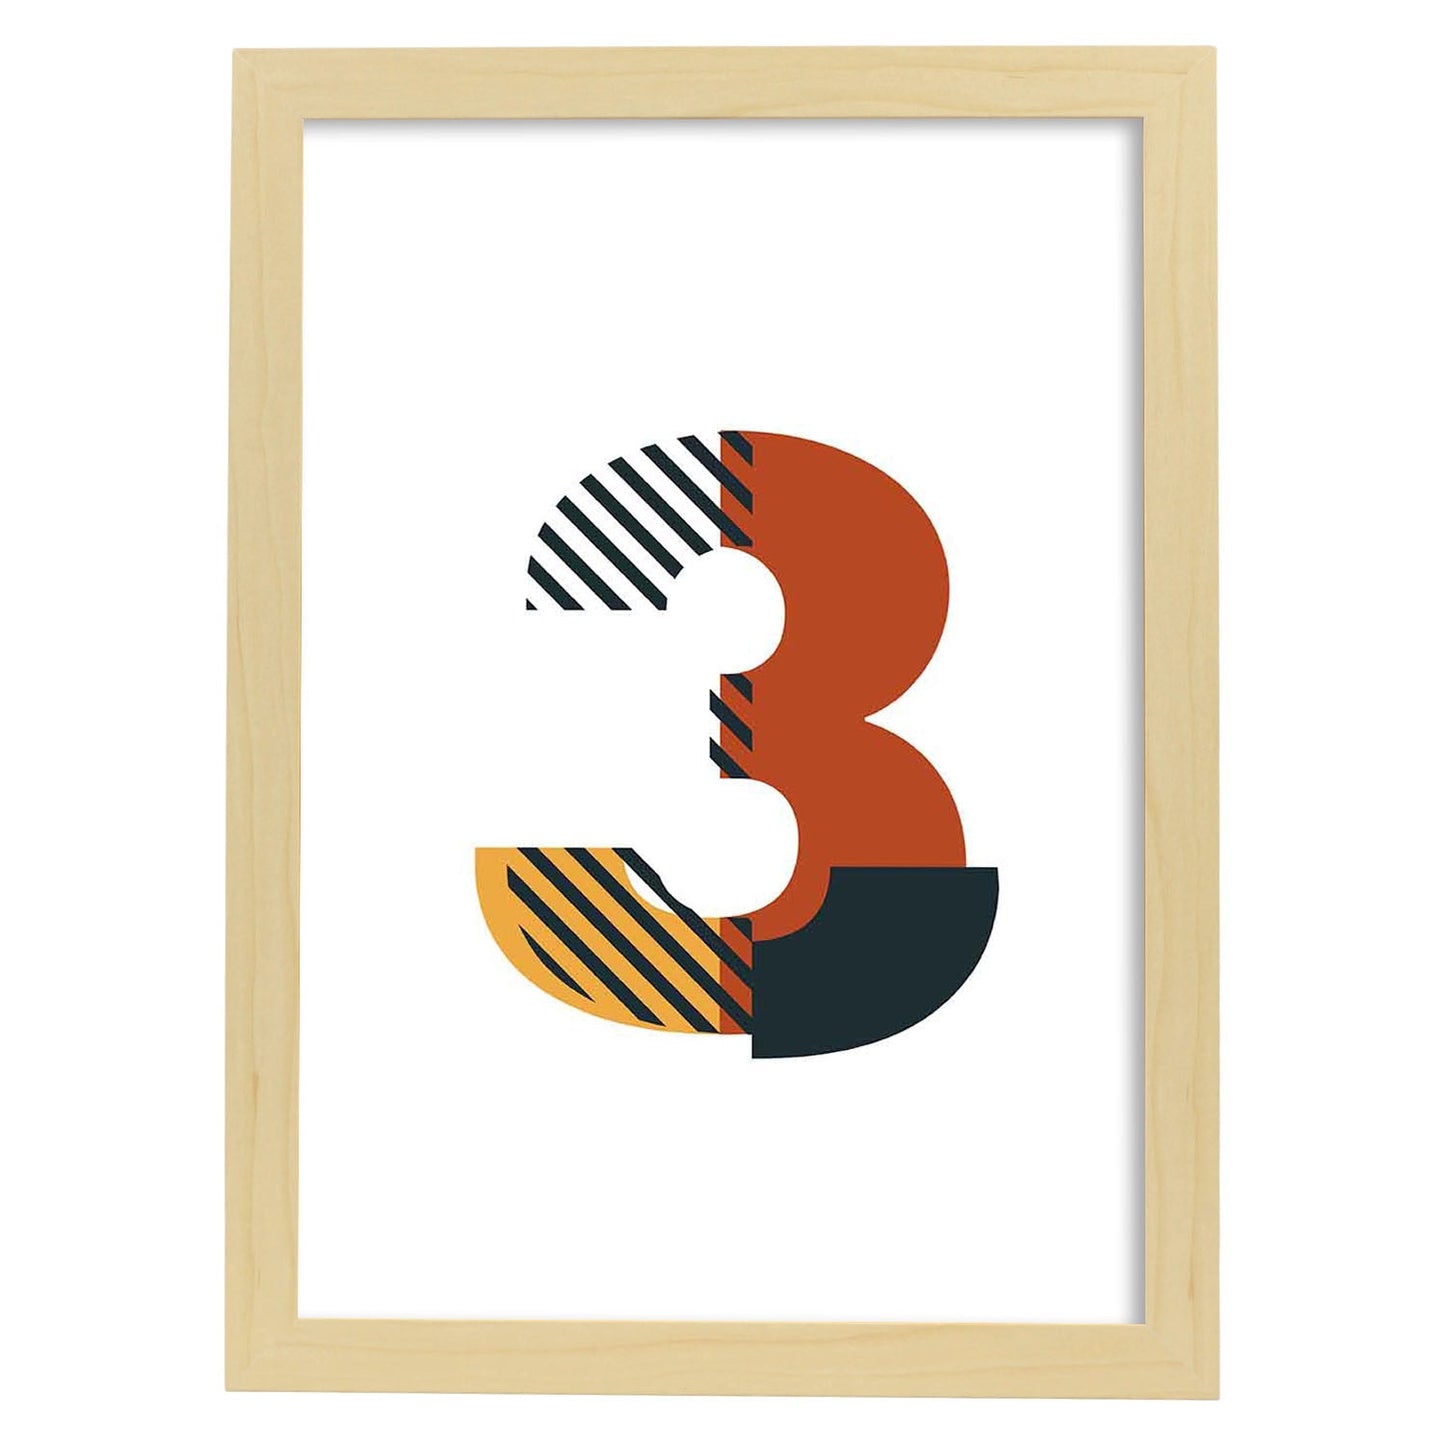 Poster de número 3. Lámina estilo Geometria con imágenes del alfabeto.-Artwork-Nacnic-A4-Marco Madera clara-Nacnic Estudio SL